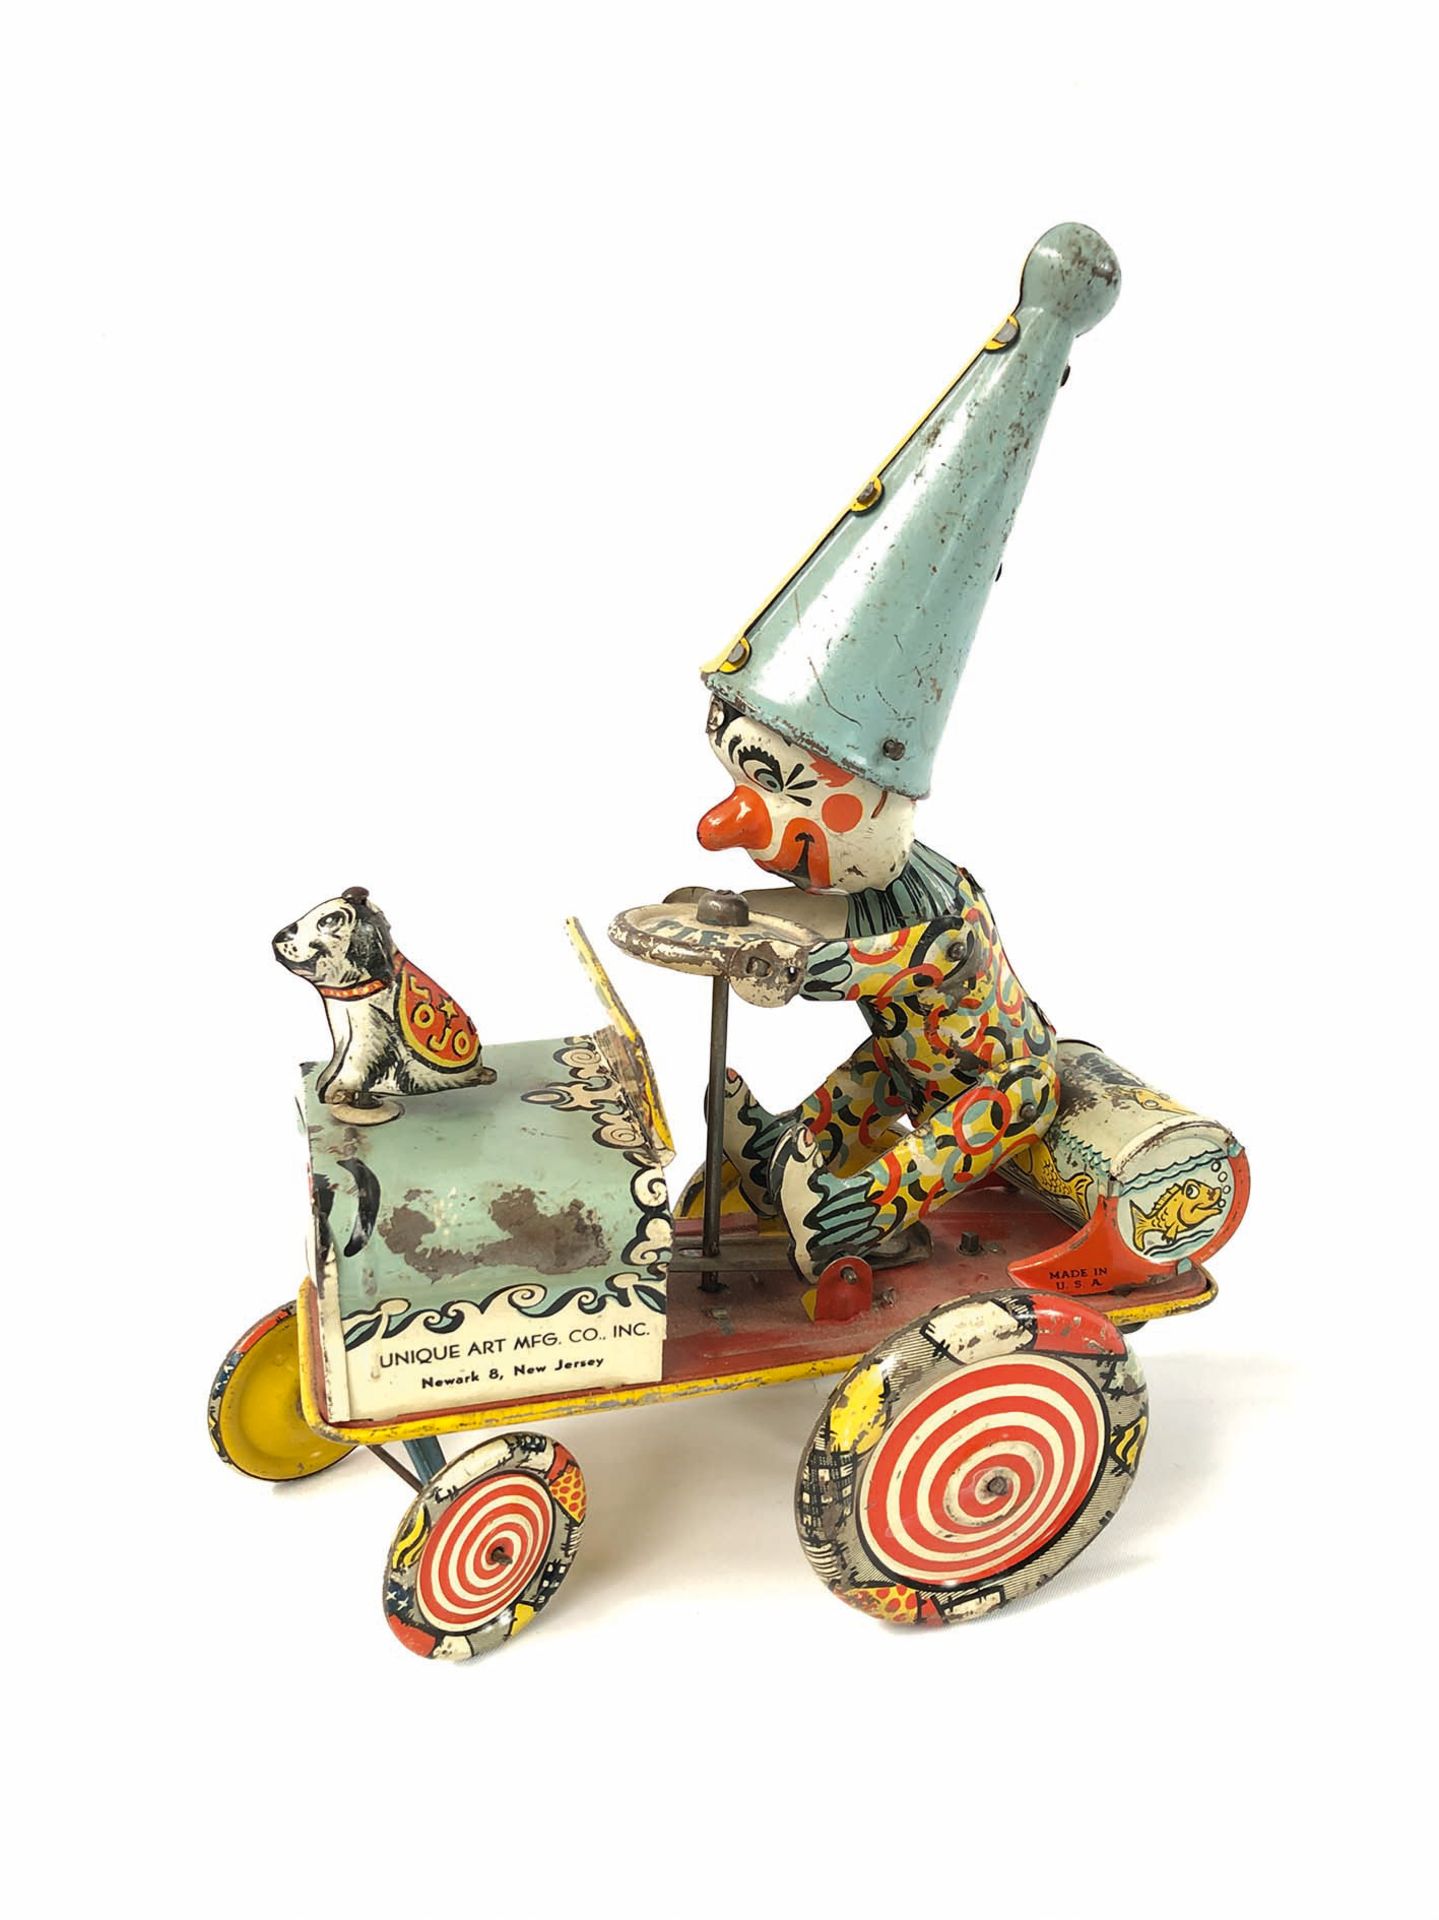 Unique Art Mfg. Co. Tin Clown Cart Toy ca. 1950